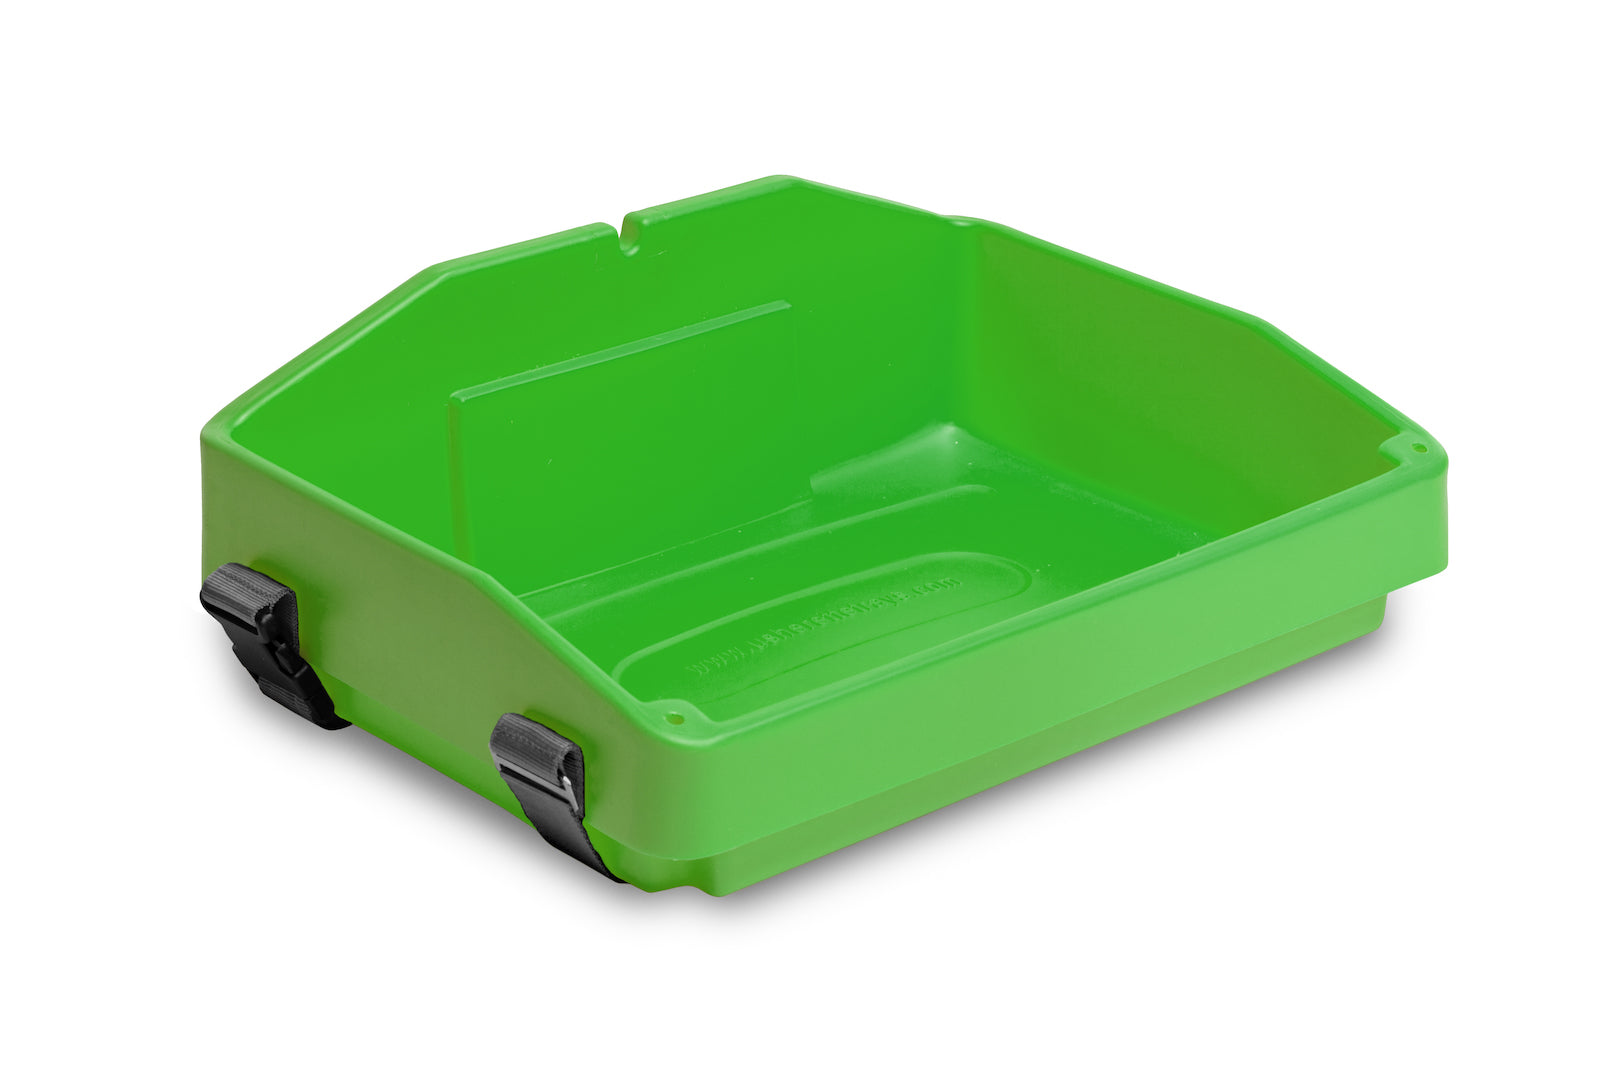 Pea green plastic usherette tray